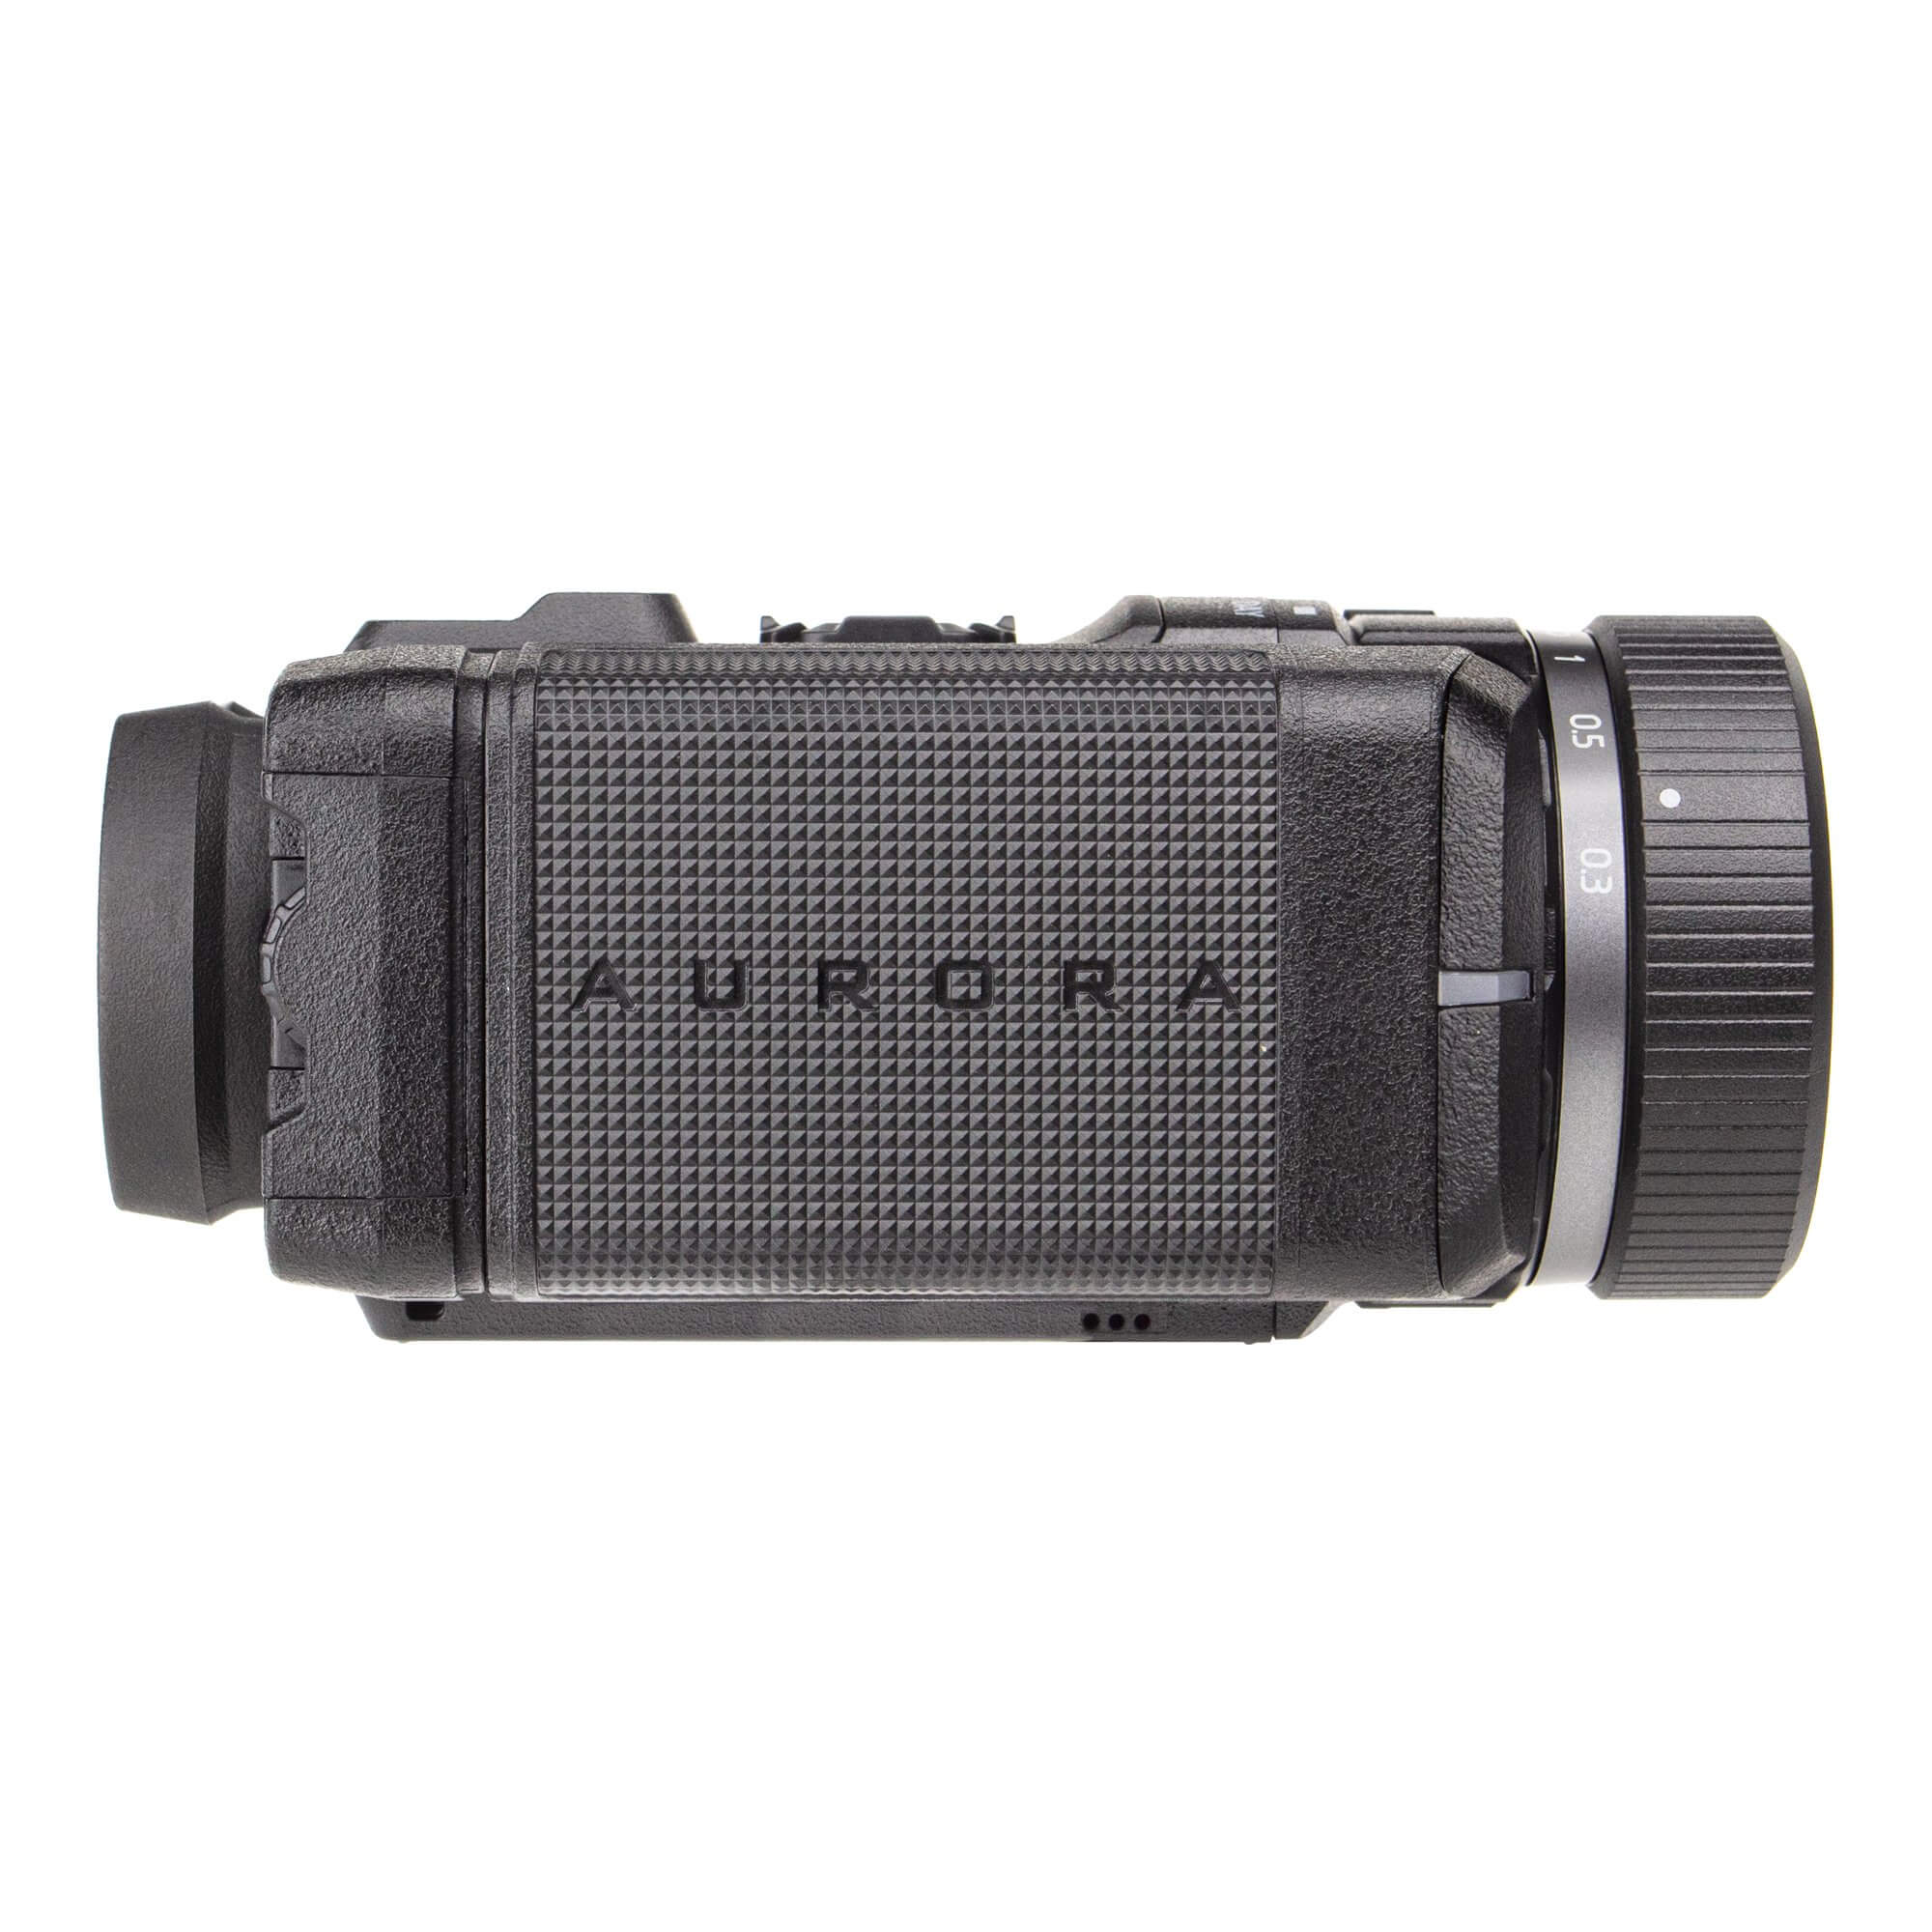 Kit Illuminatore IR (Infrarosso) per Visore / Telecamera serie Aurora -  Sionyx